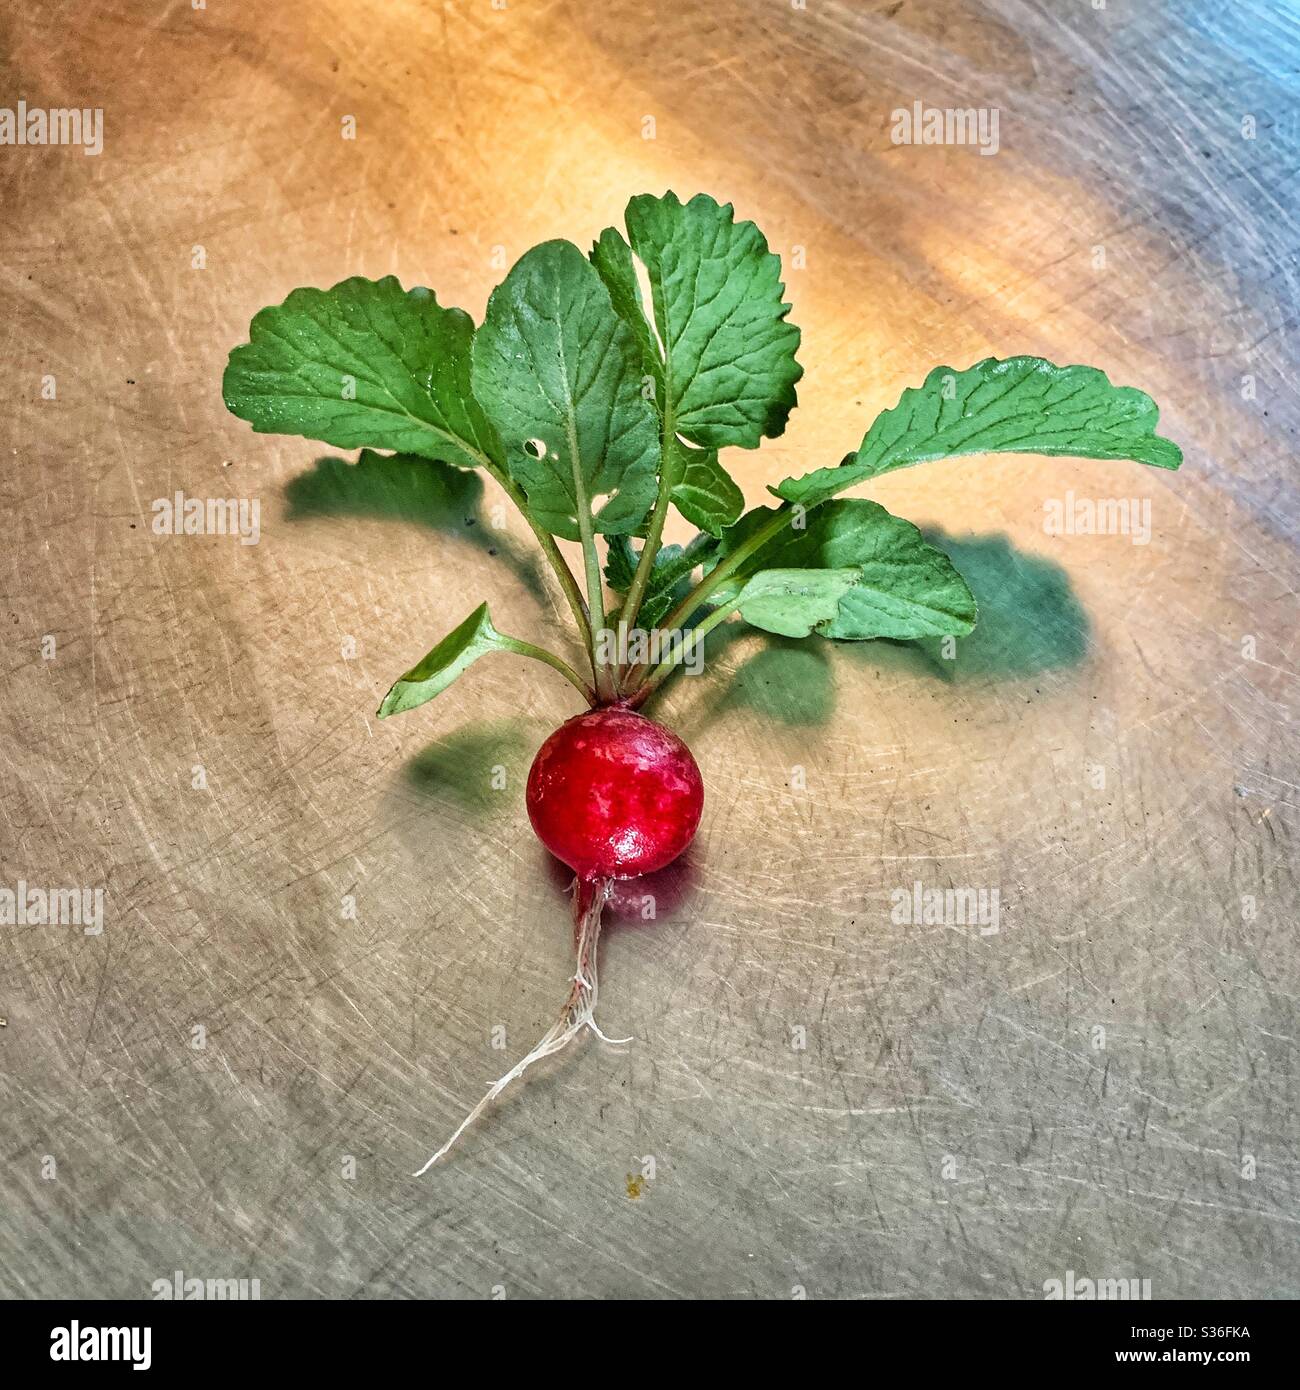 Radish on stainless steel table in kitchen Stock Photo